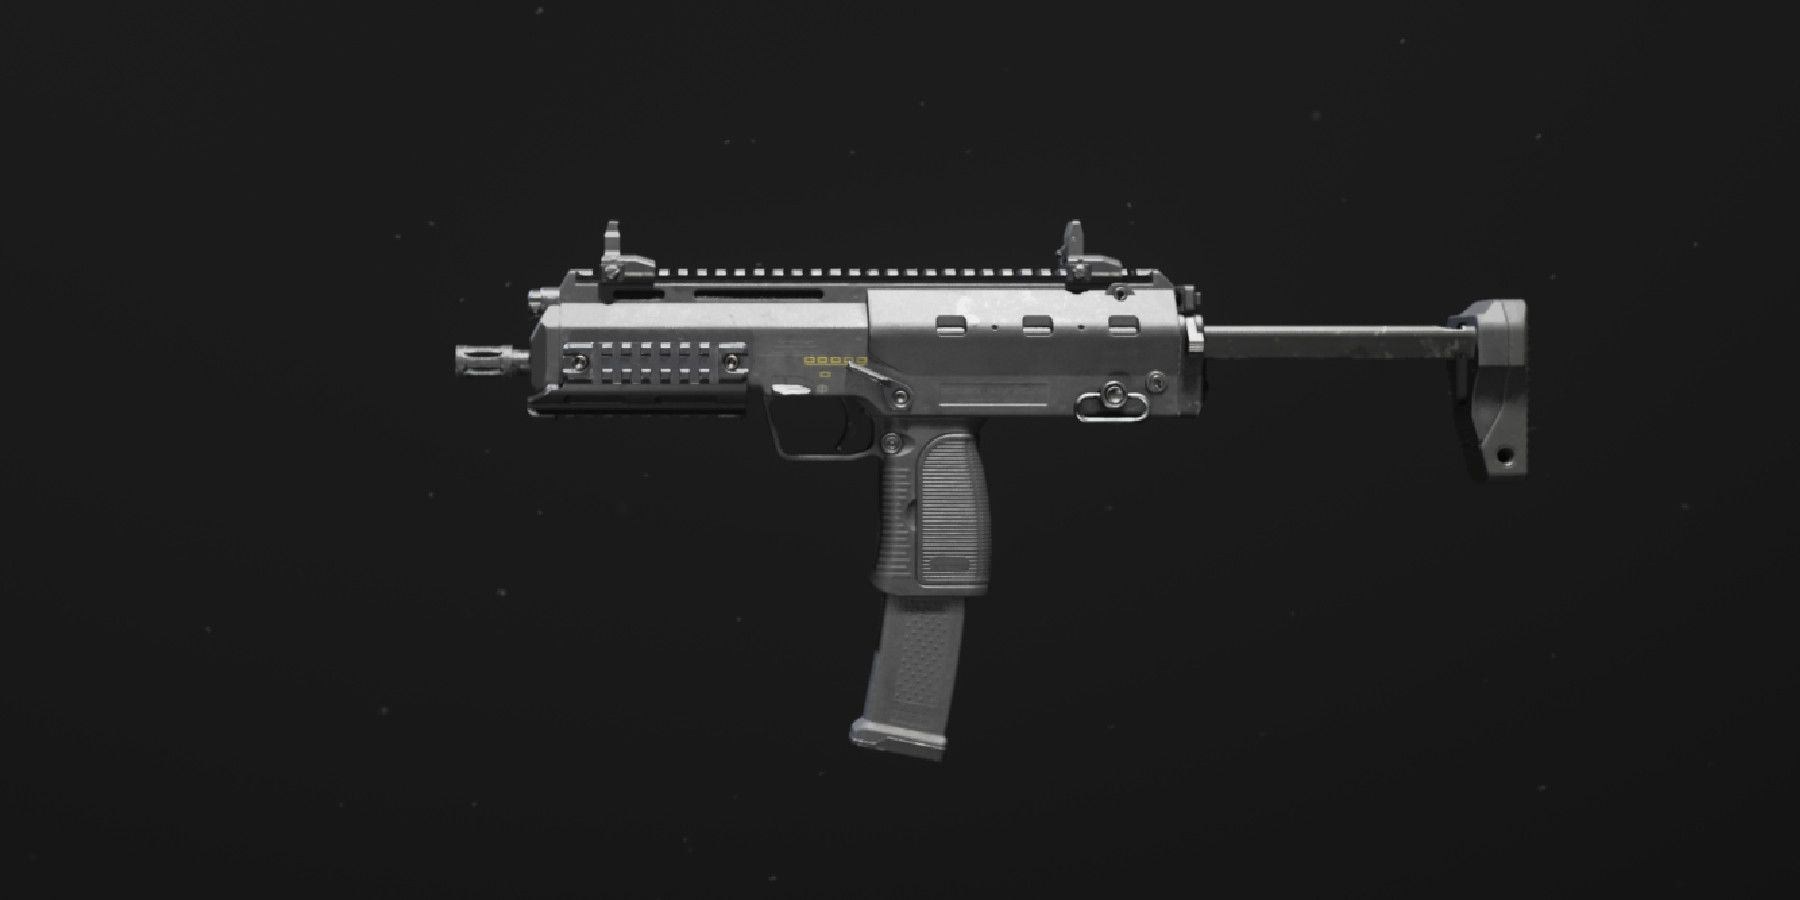 mw3 - weapon camos - vel 46